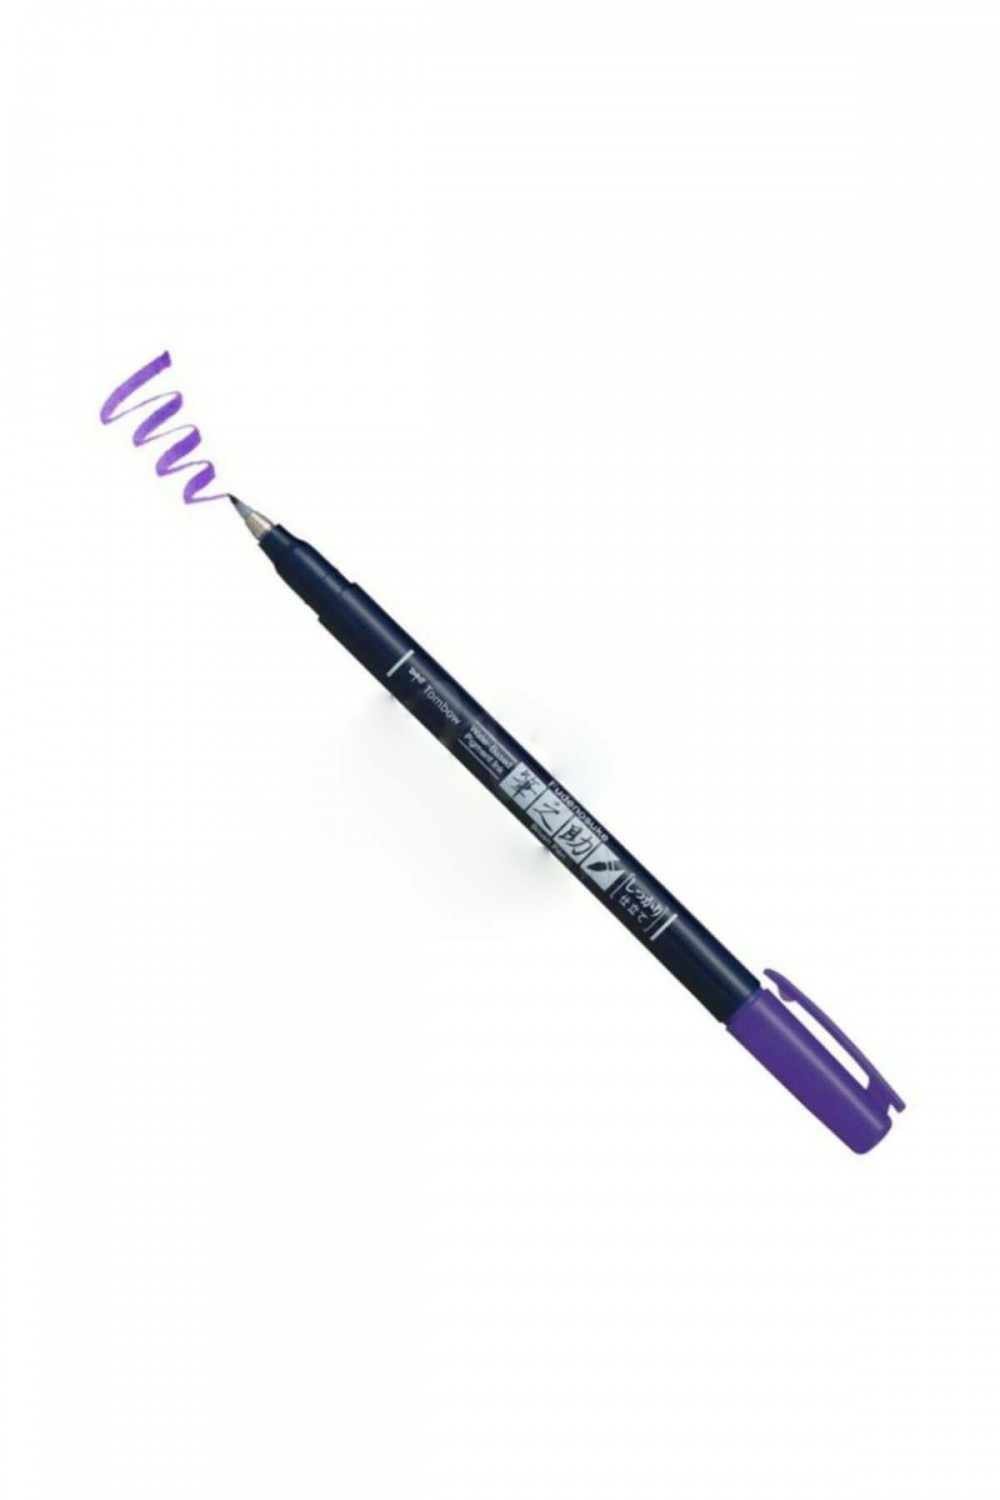 Tombow Fudenosuke Brush Pen Fırça Uçlu Kalem Sert Uç - Mor